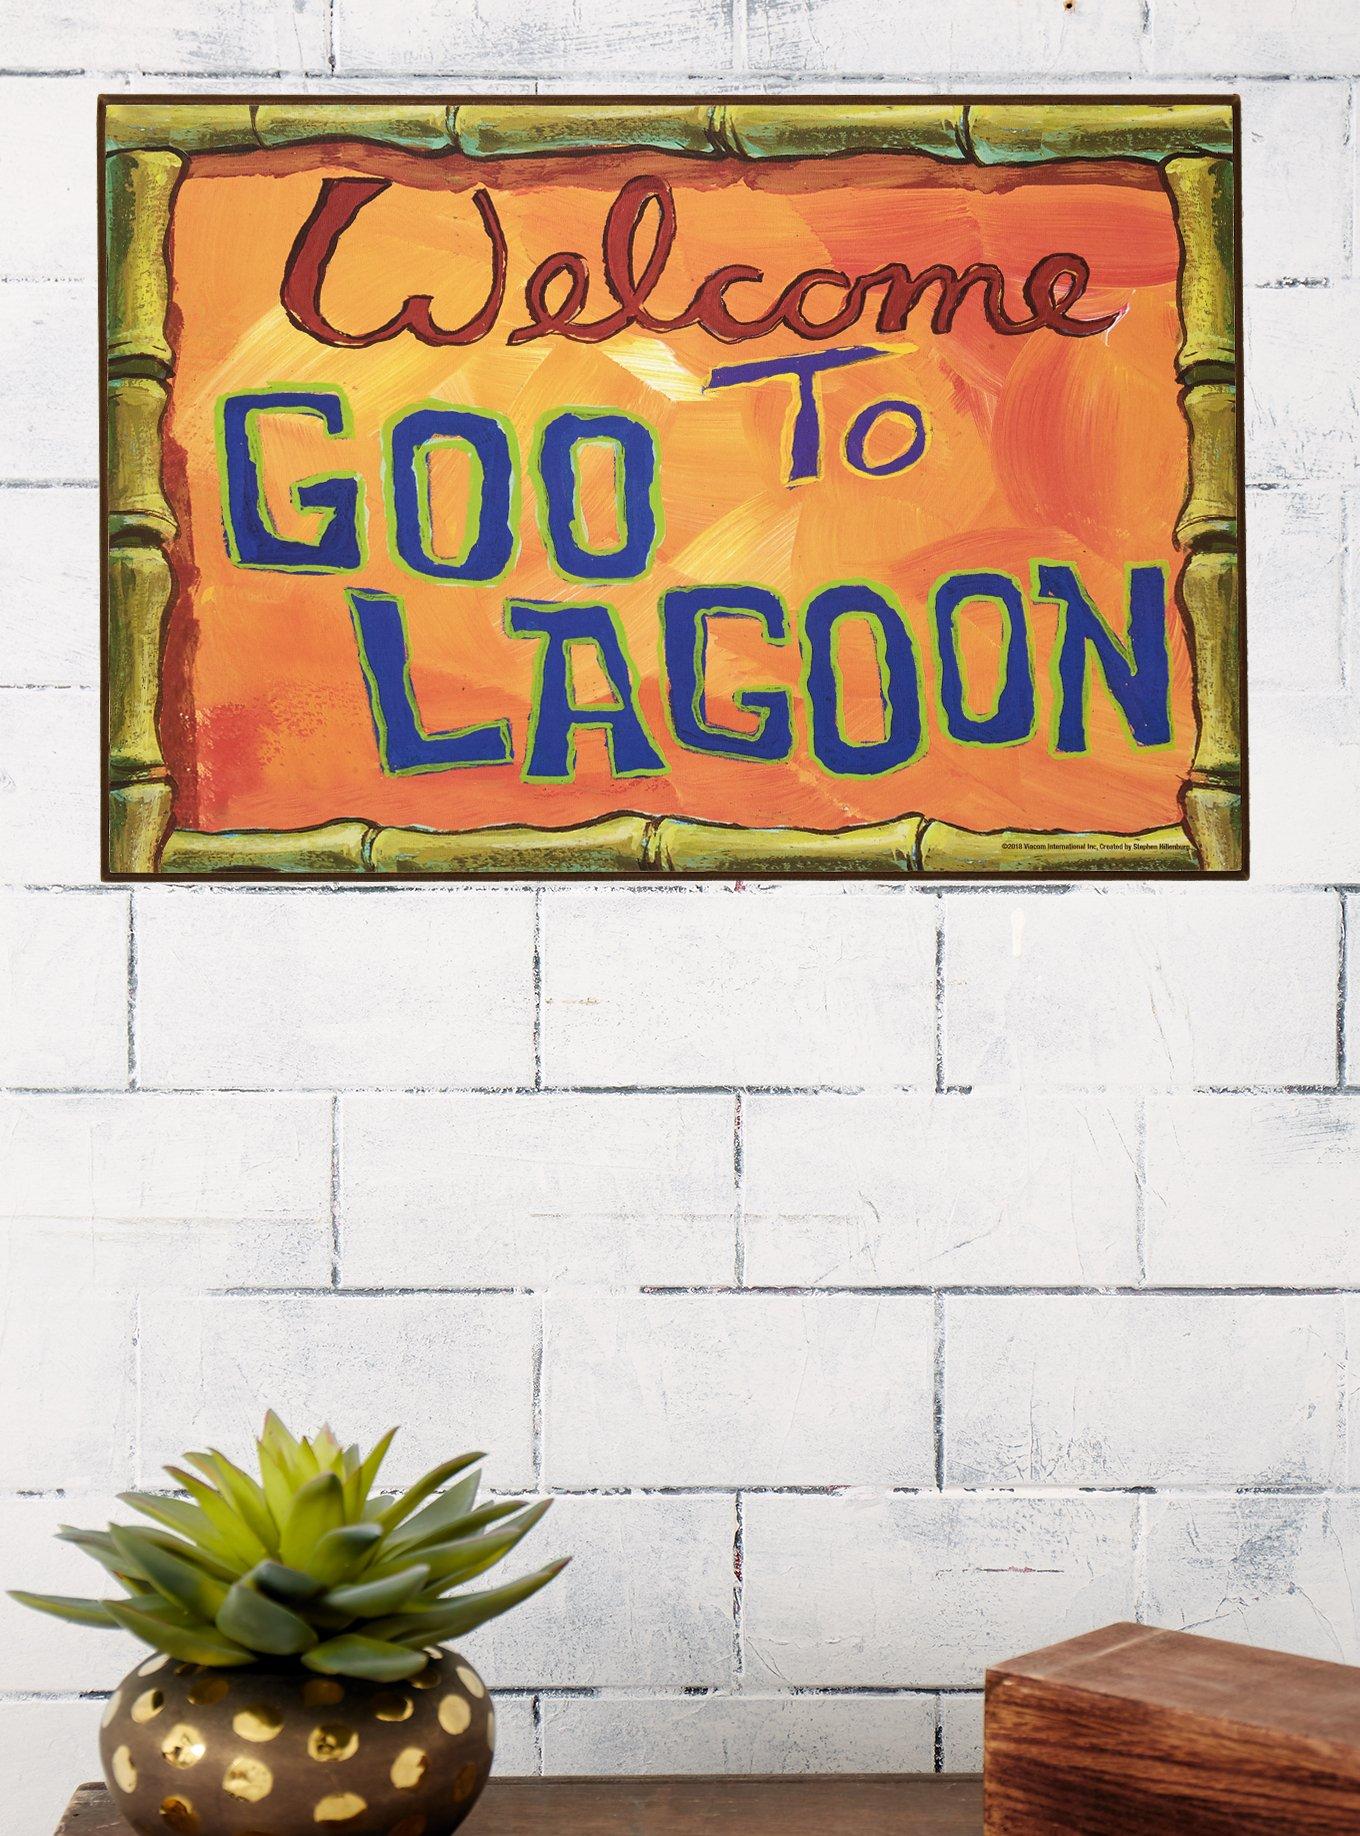 SpongeBob SquarePants Welcome To Goo Lagoon Wood Wall Art, , alternate